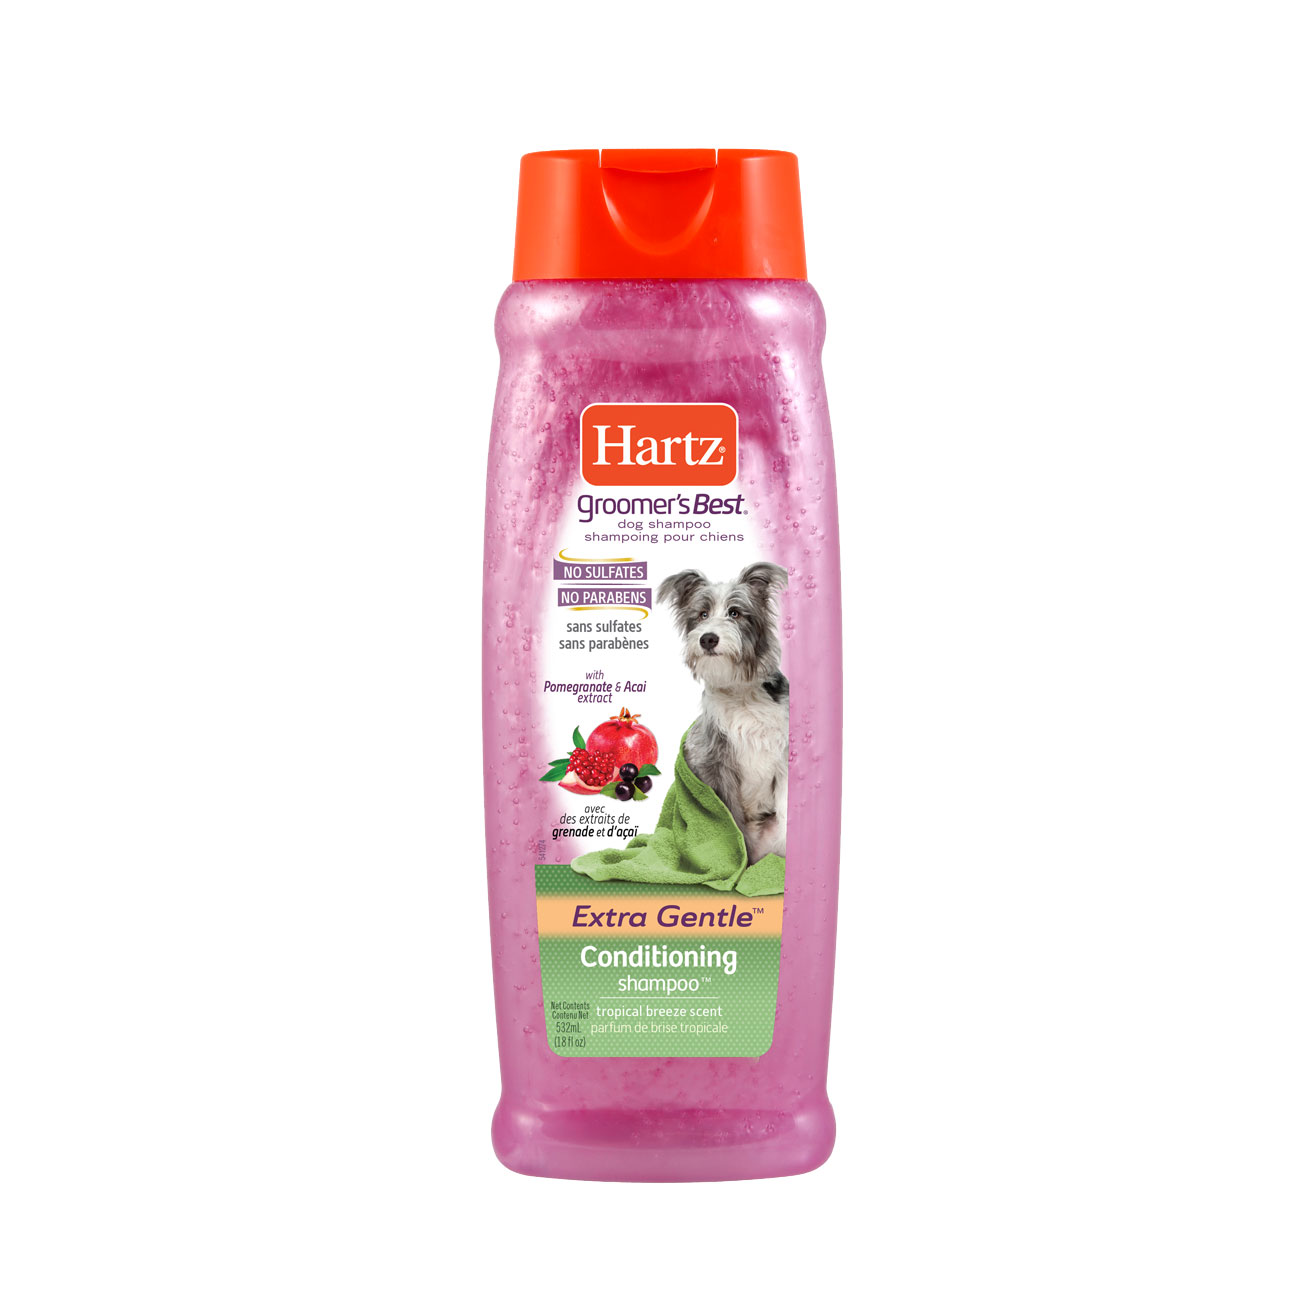 hartz groomer's best cat shampoo